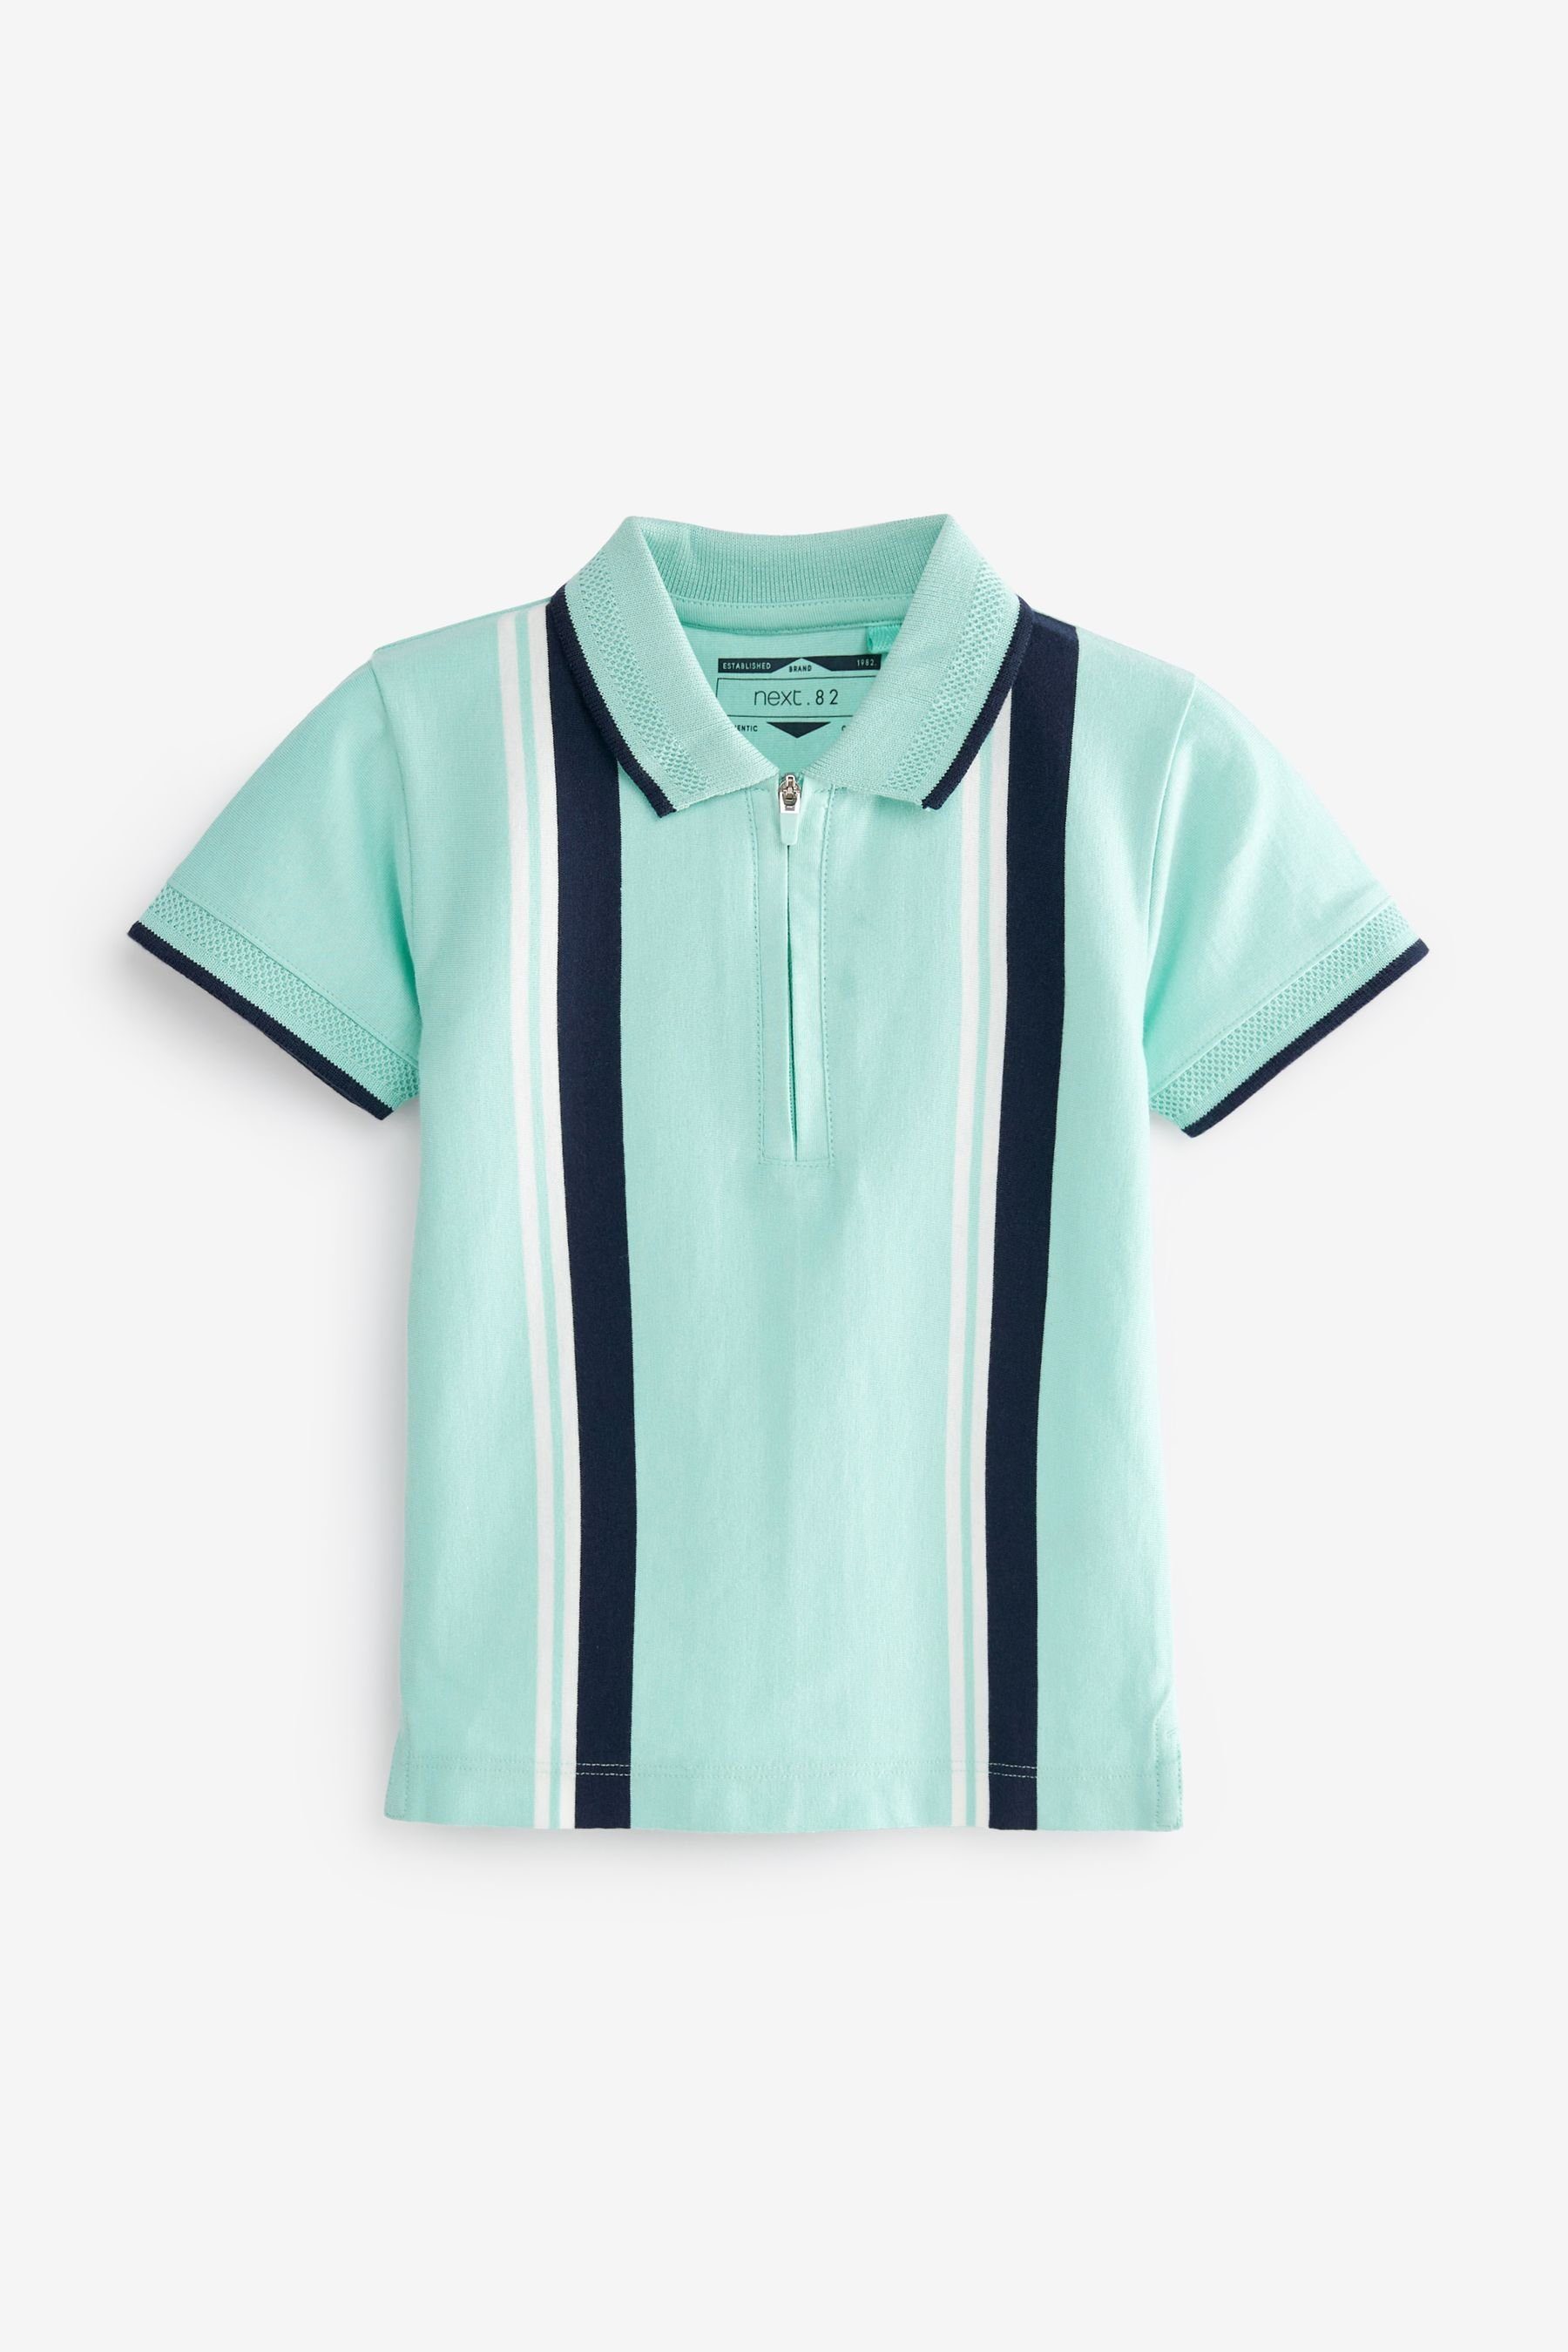 Kinder Jungen (Gr. 50 - 92) Next Poloshirt Poloshirt mit Querstreifen und Reißverschluss